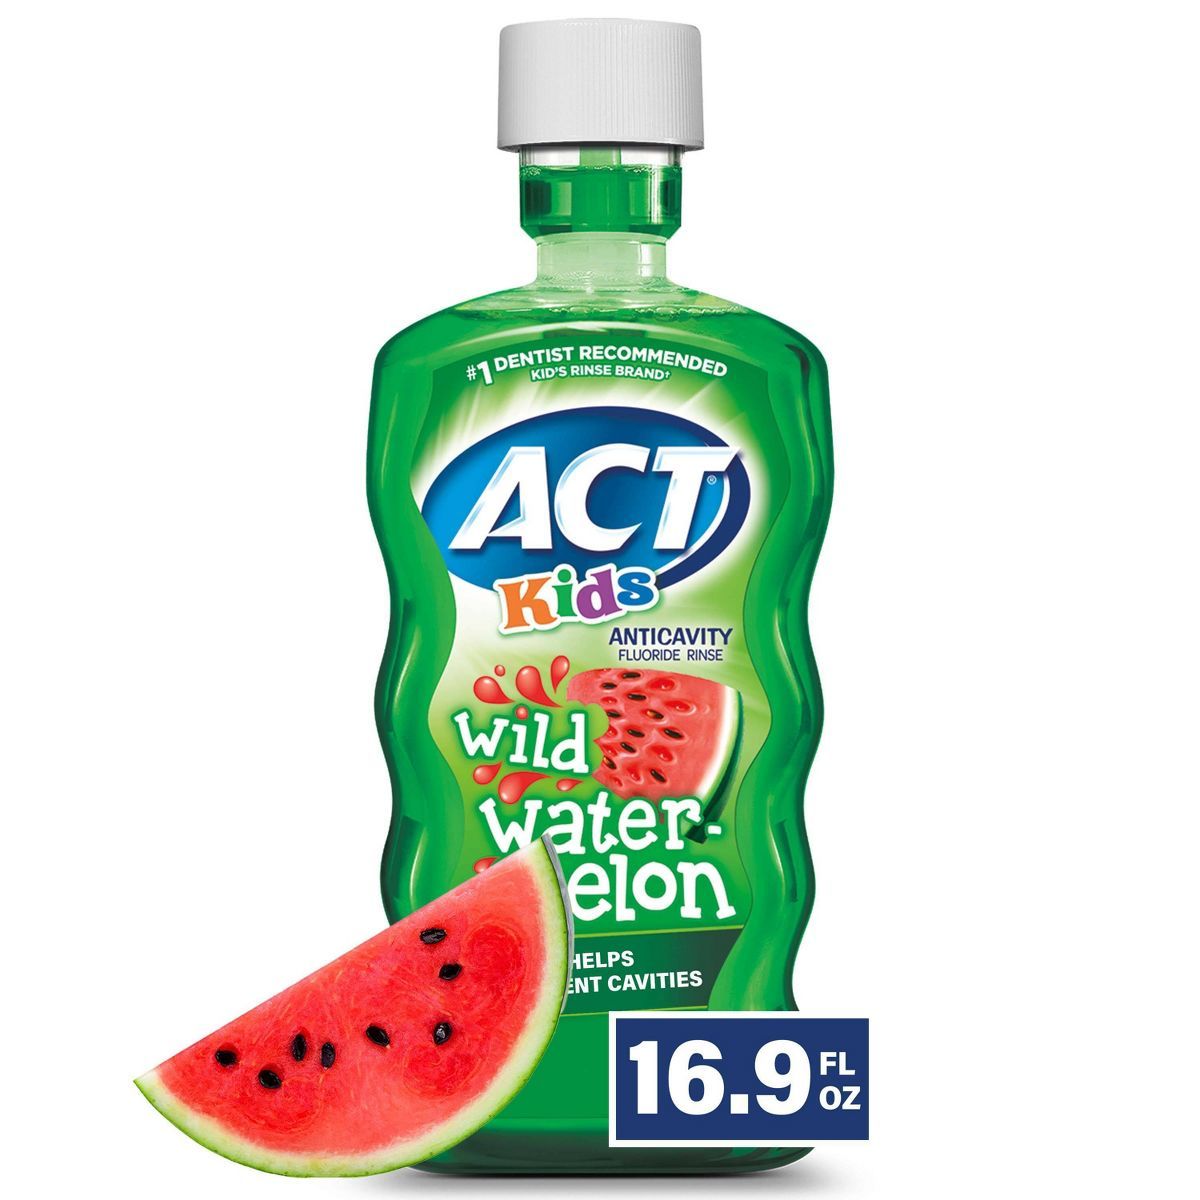 ACT Kids' Wild Watermelon Anticavity Fluoride Rinse - 16.9 fl oz | Target